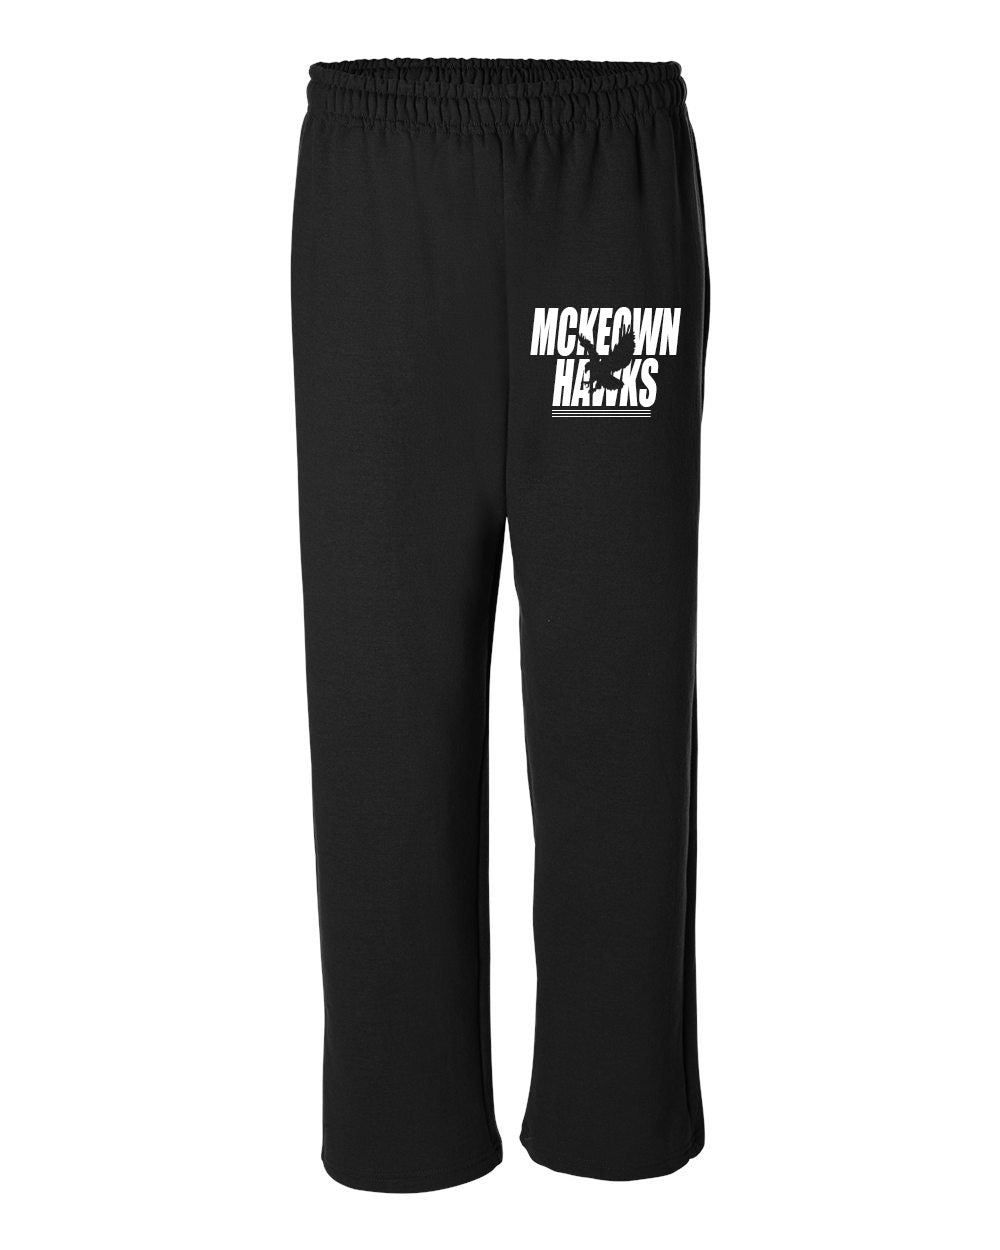 McKeown Design 3 Open Bottom Sweatpants